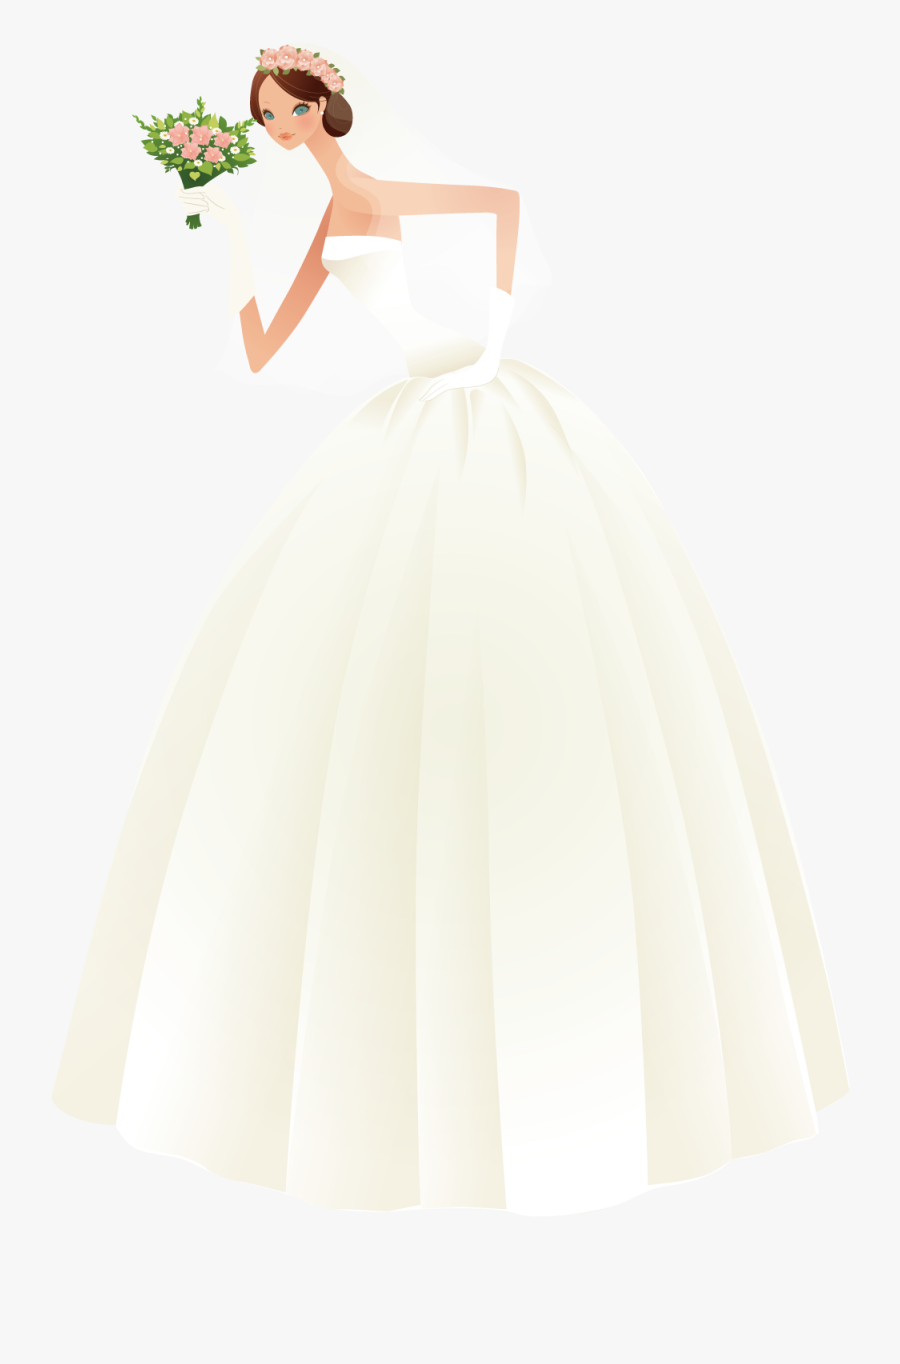 Bride Dress Png - Bride, Transparent Clipart